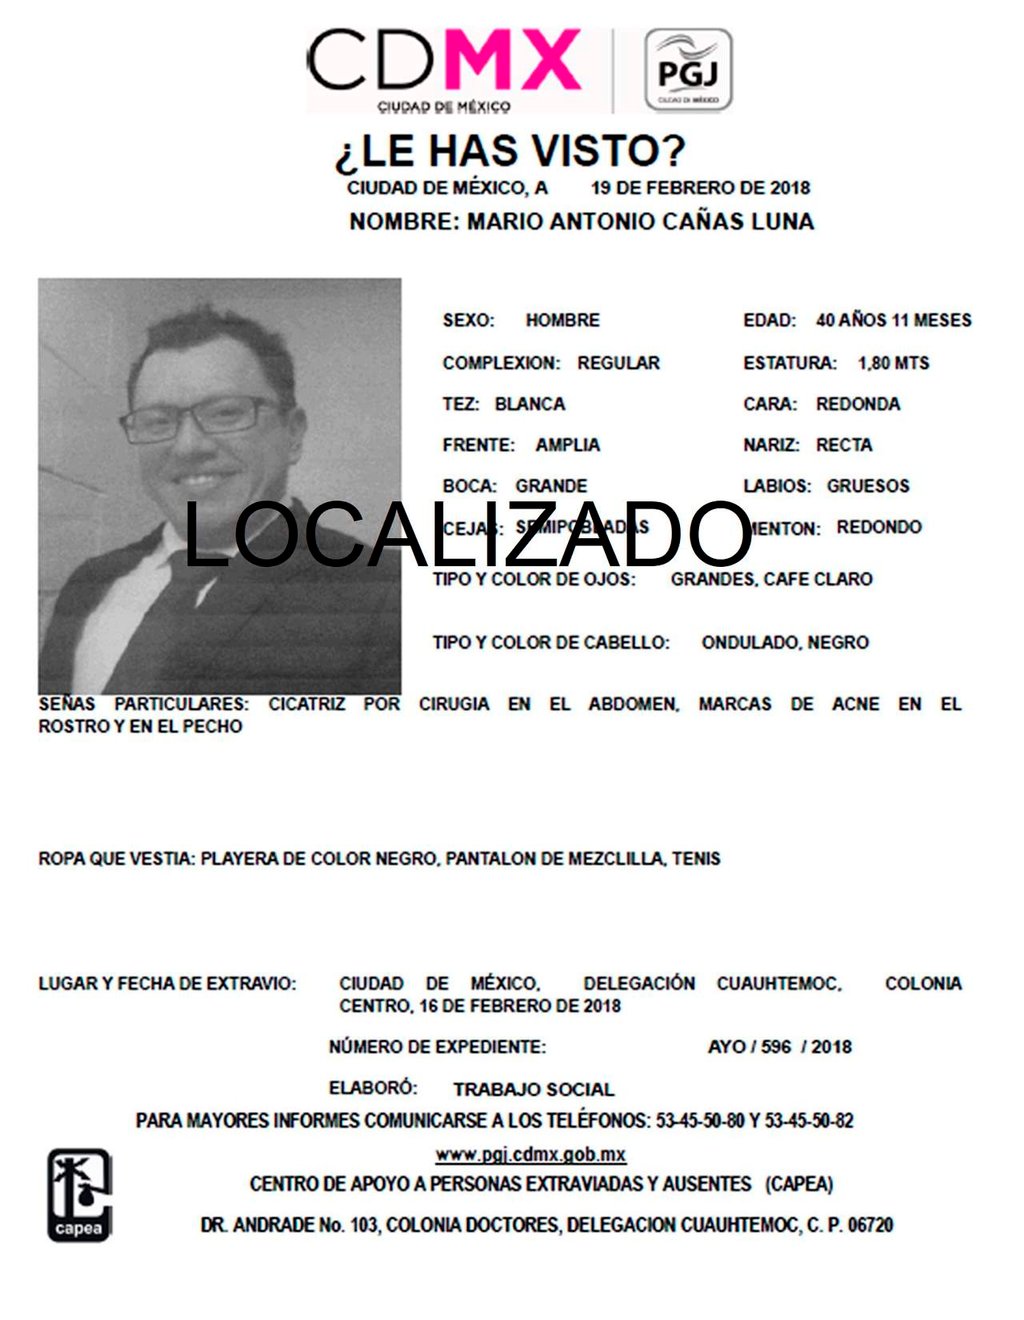 Autoridades localizan a periodista desaparecido en CDMX